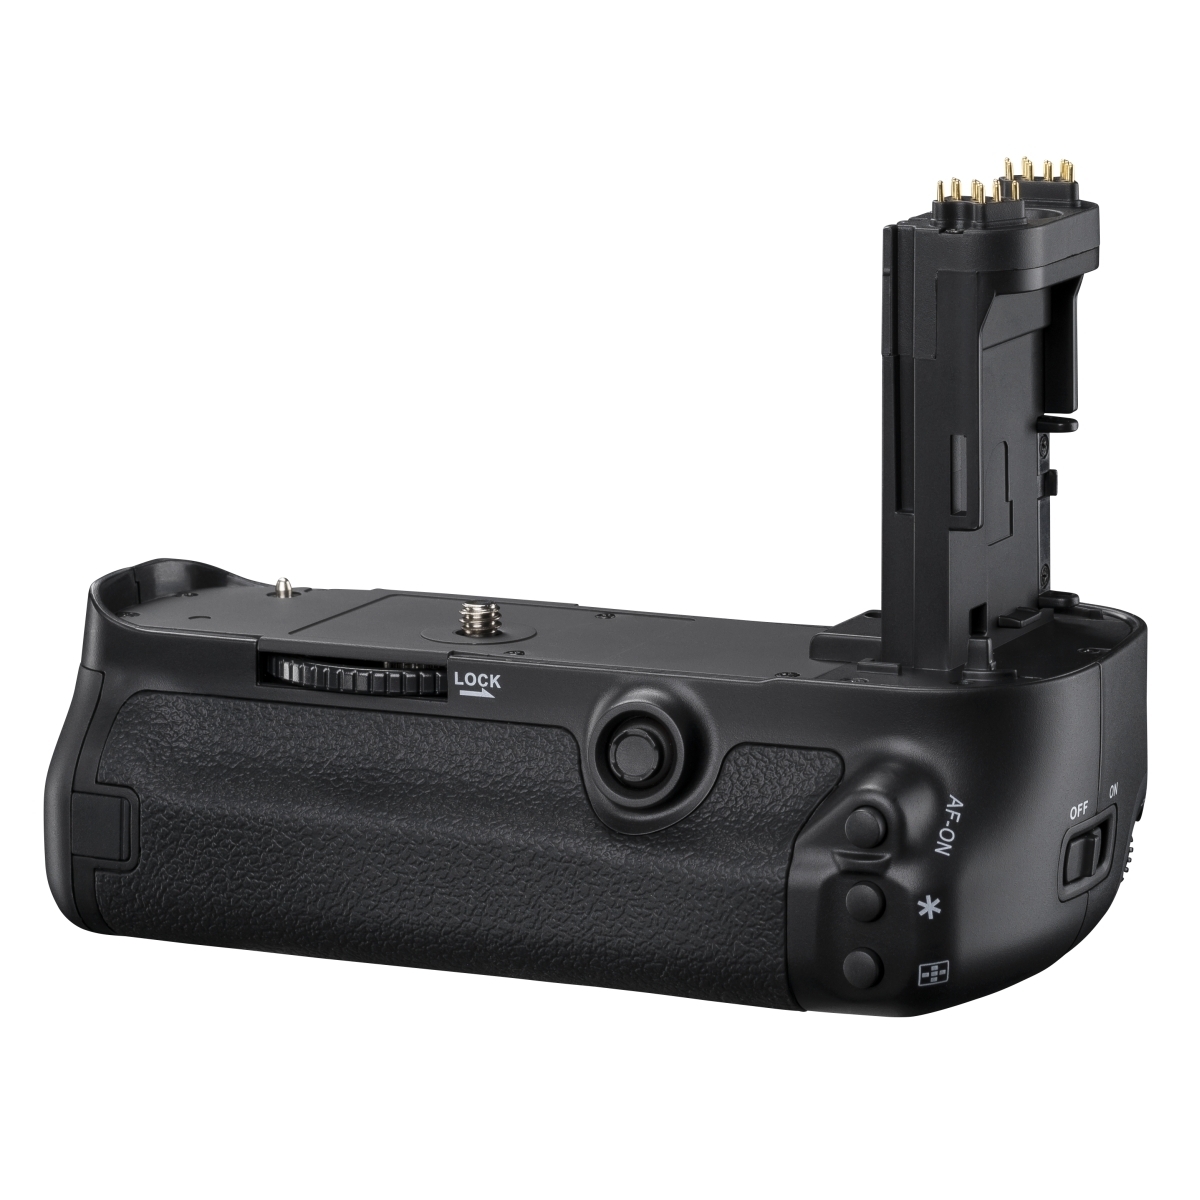 Walimex pro Battery Grip for Canon 5DMarkIII